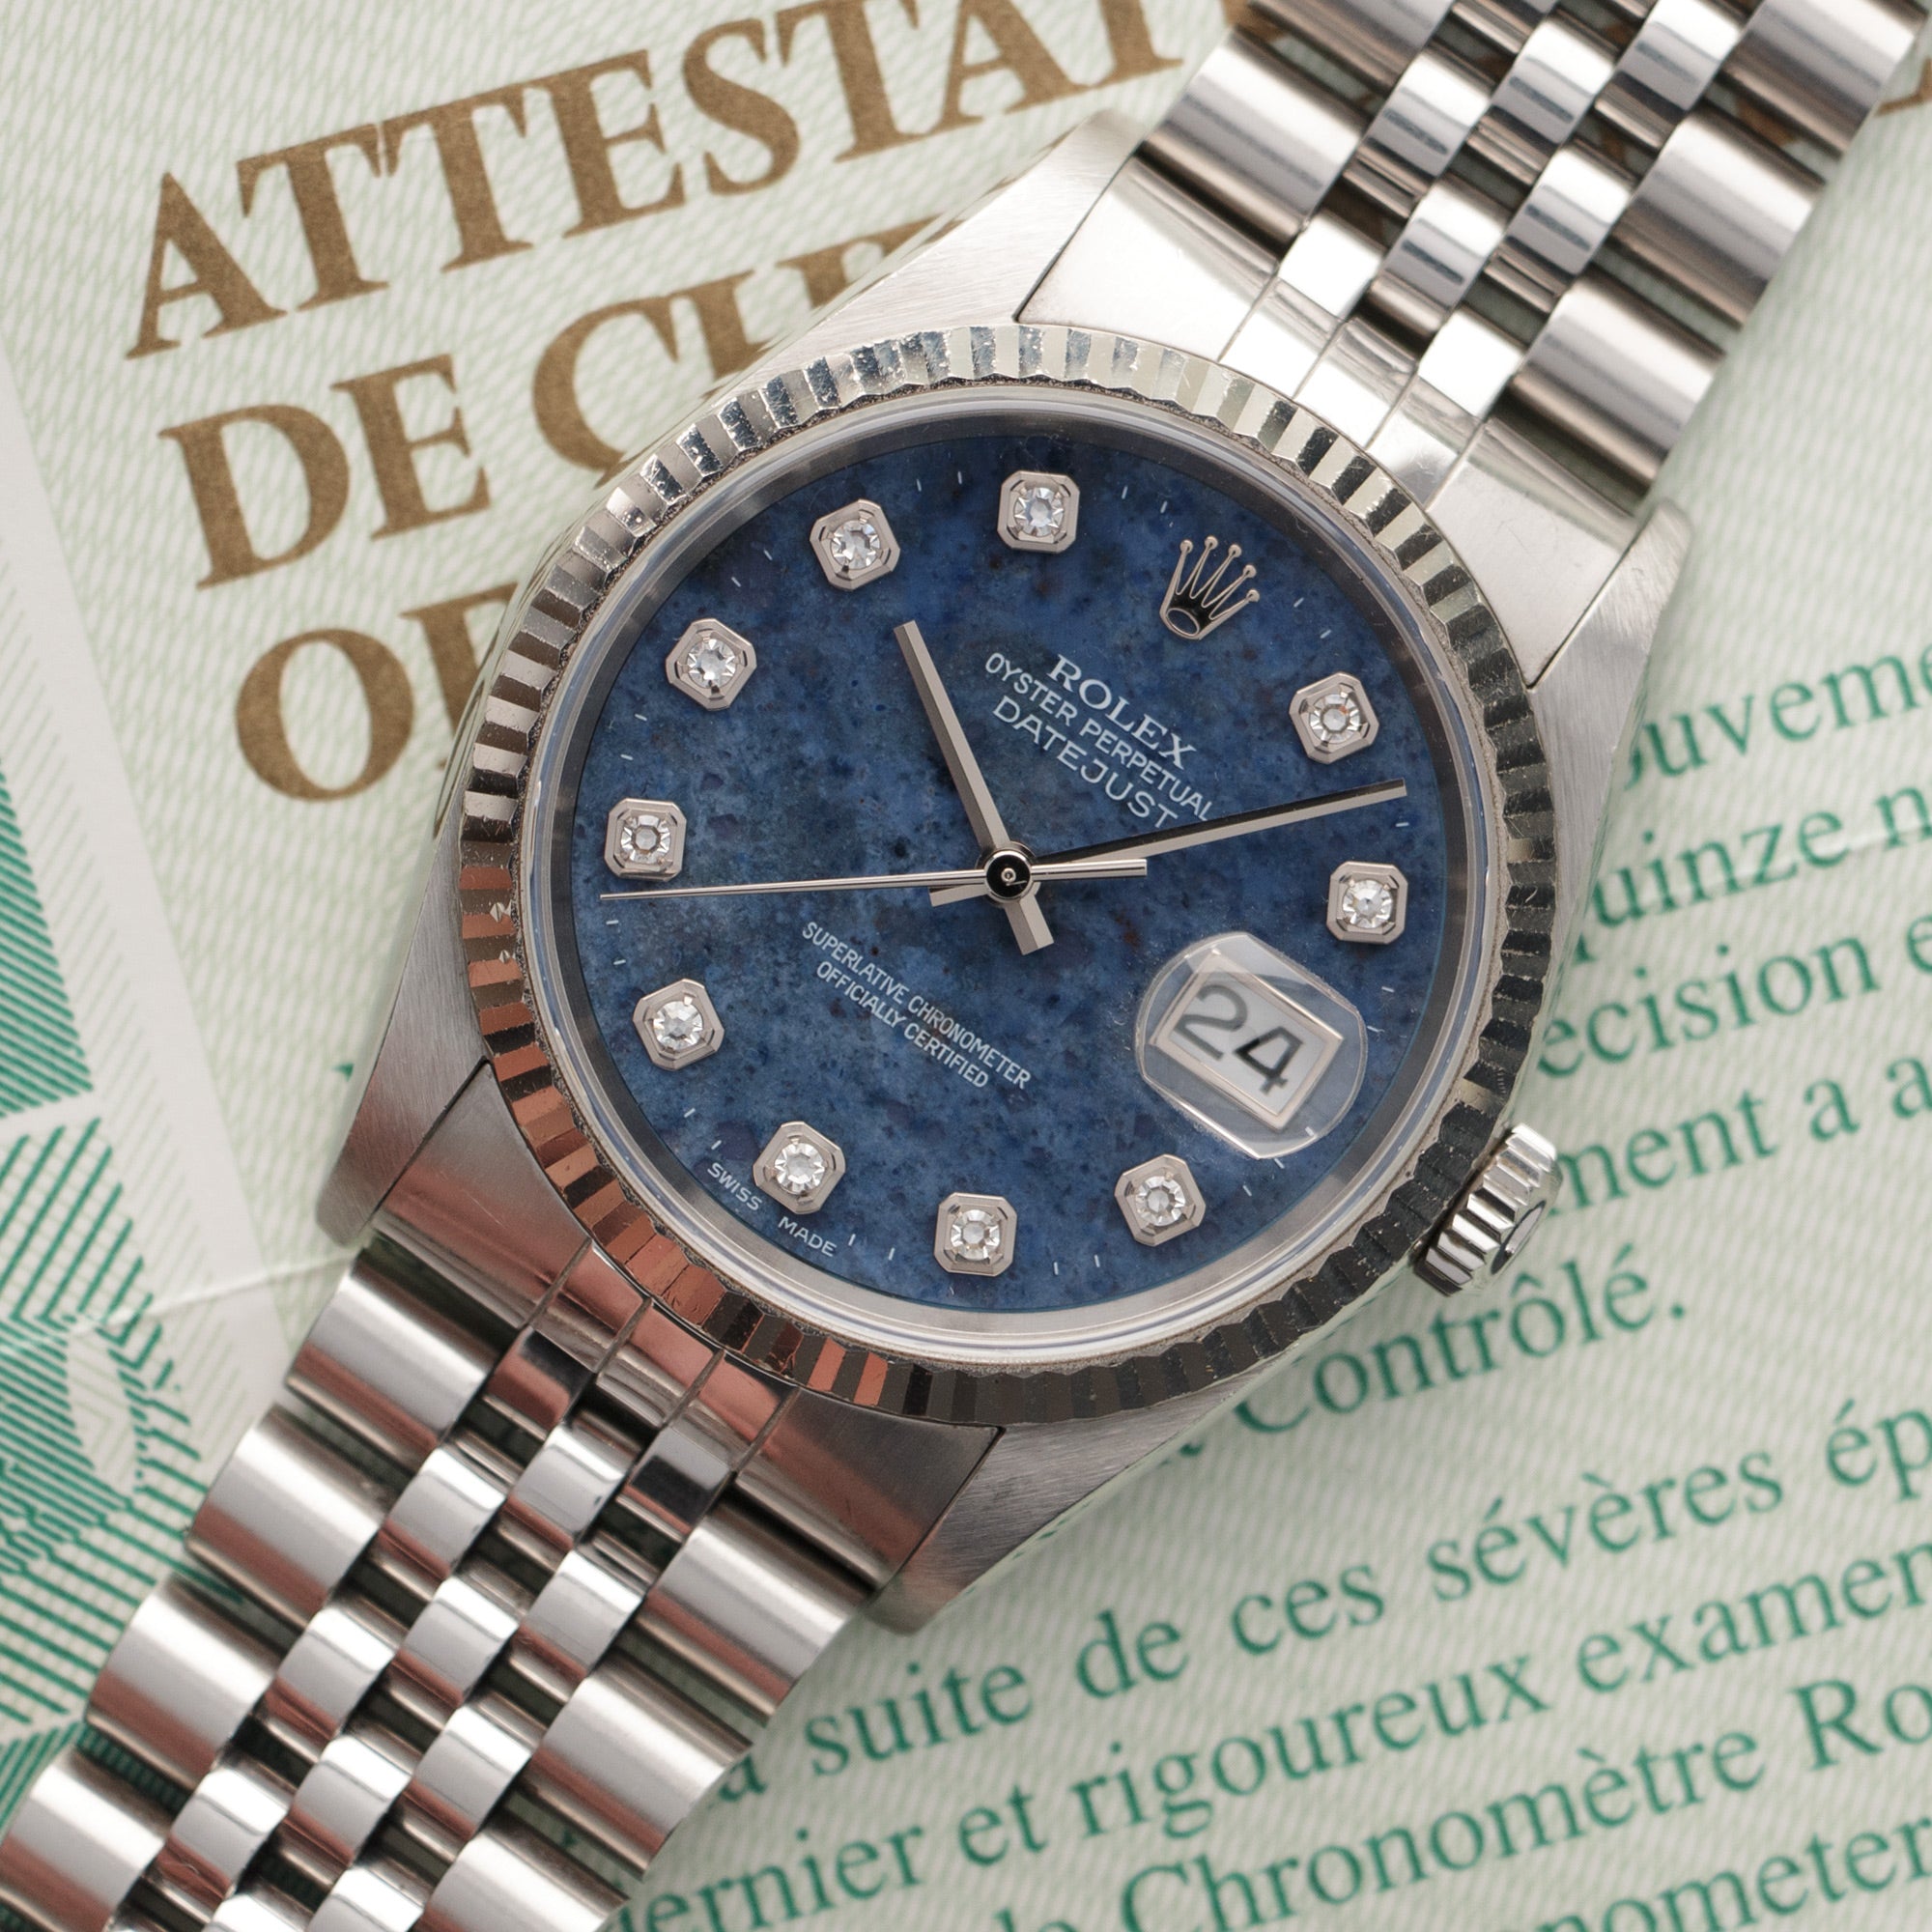 Rolex - Rolex Datejust Sodalite Diamond Watch Ref. 16234, with Original Paper - The Keystone Watches